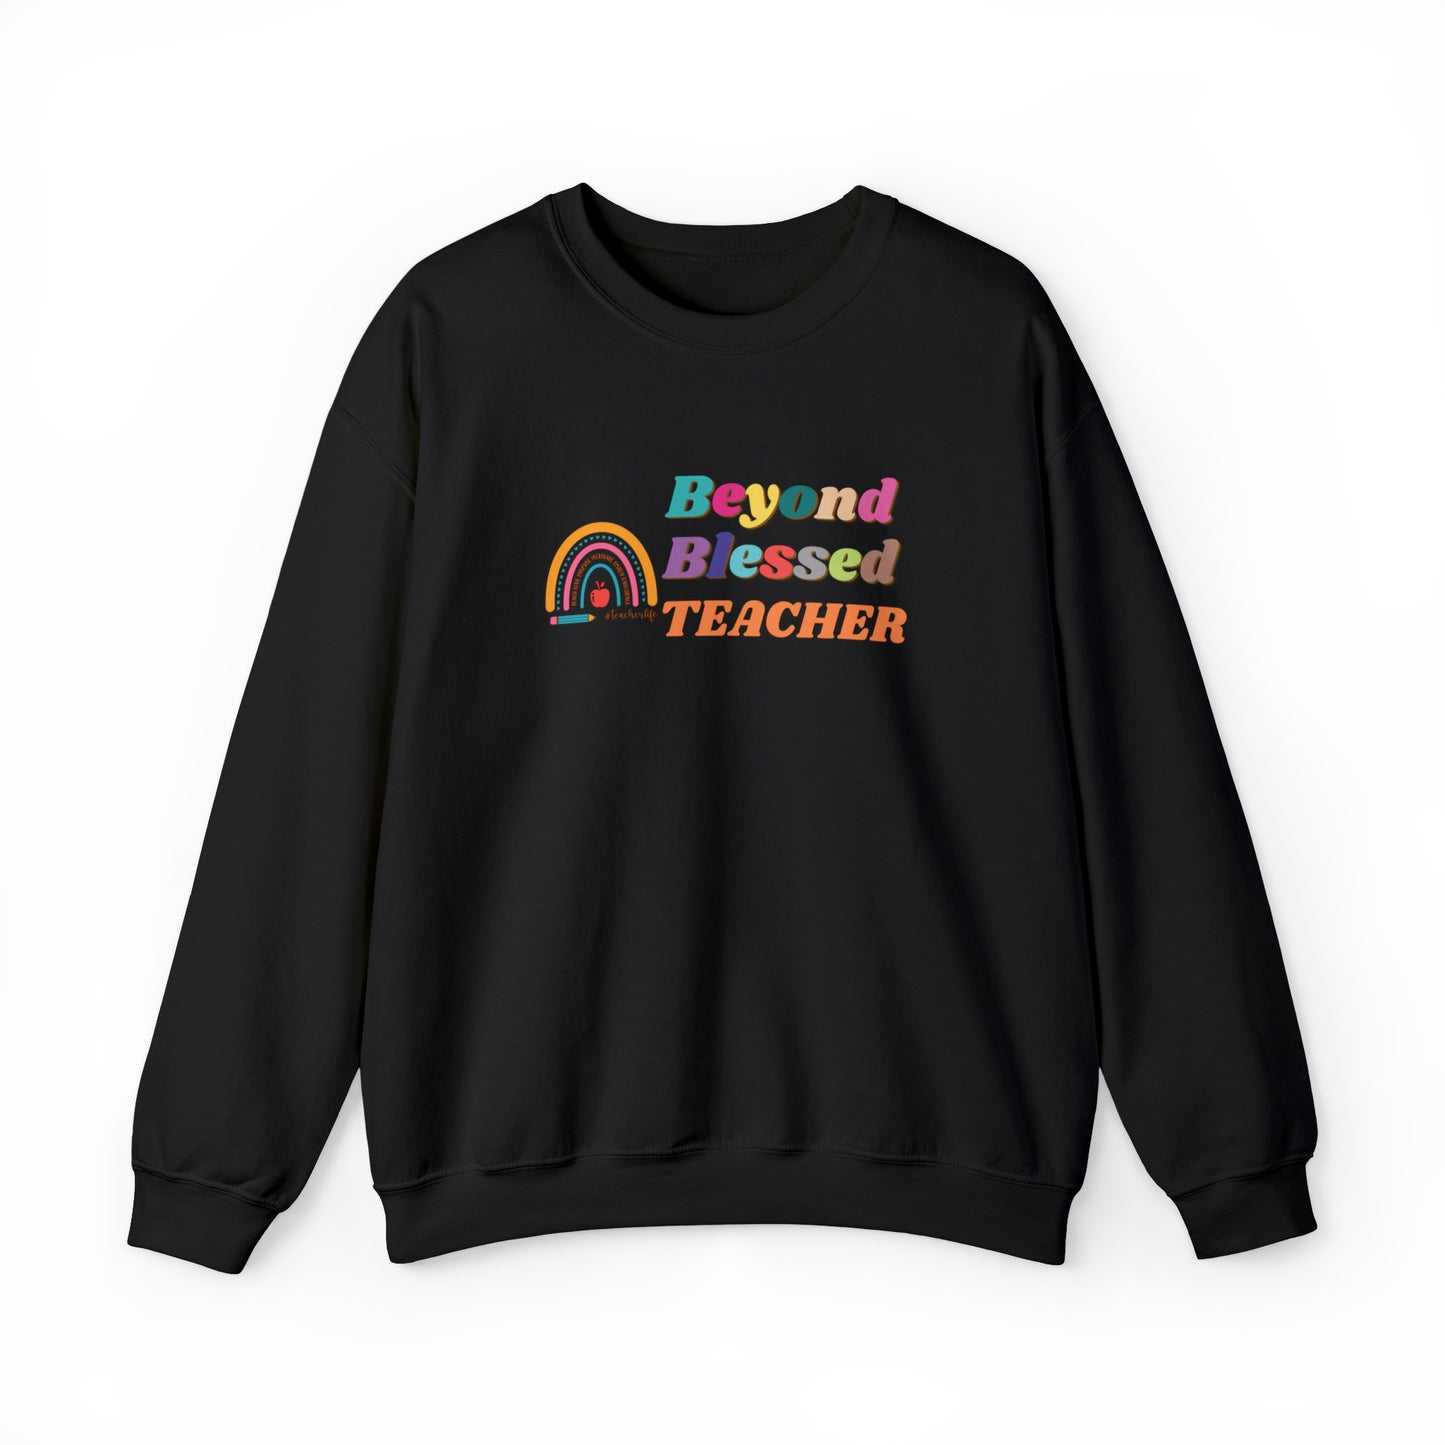 Beyond Blessed Teacher - Crewneck Sweatshirt